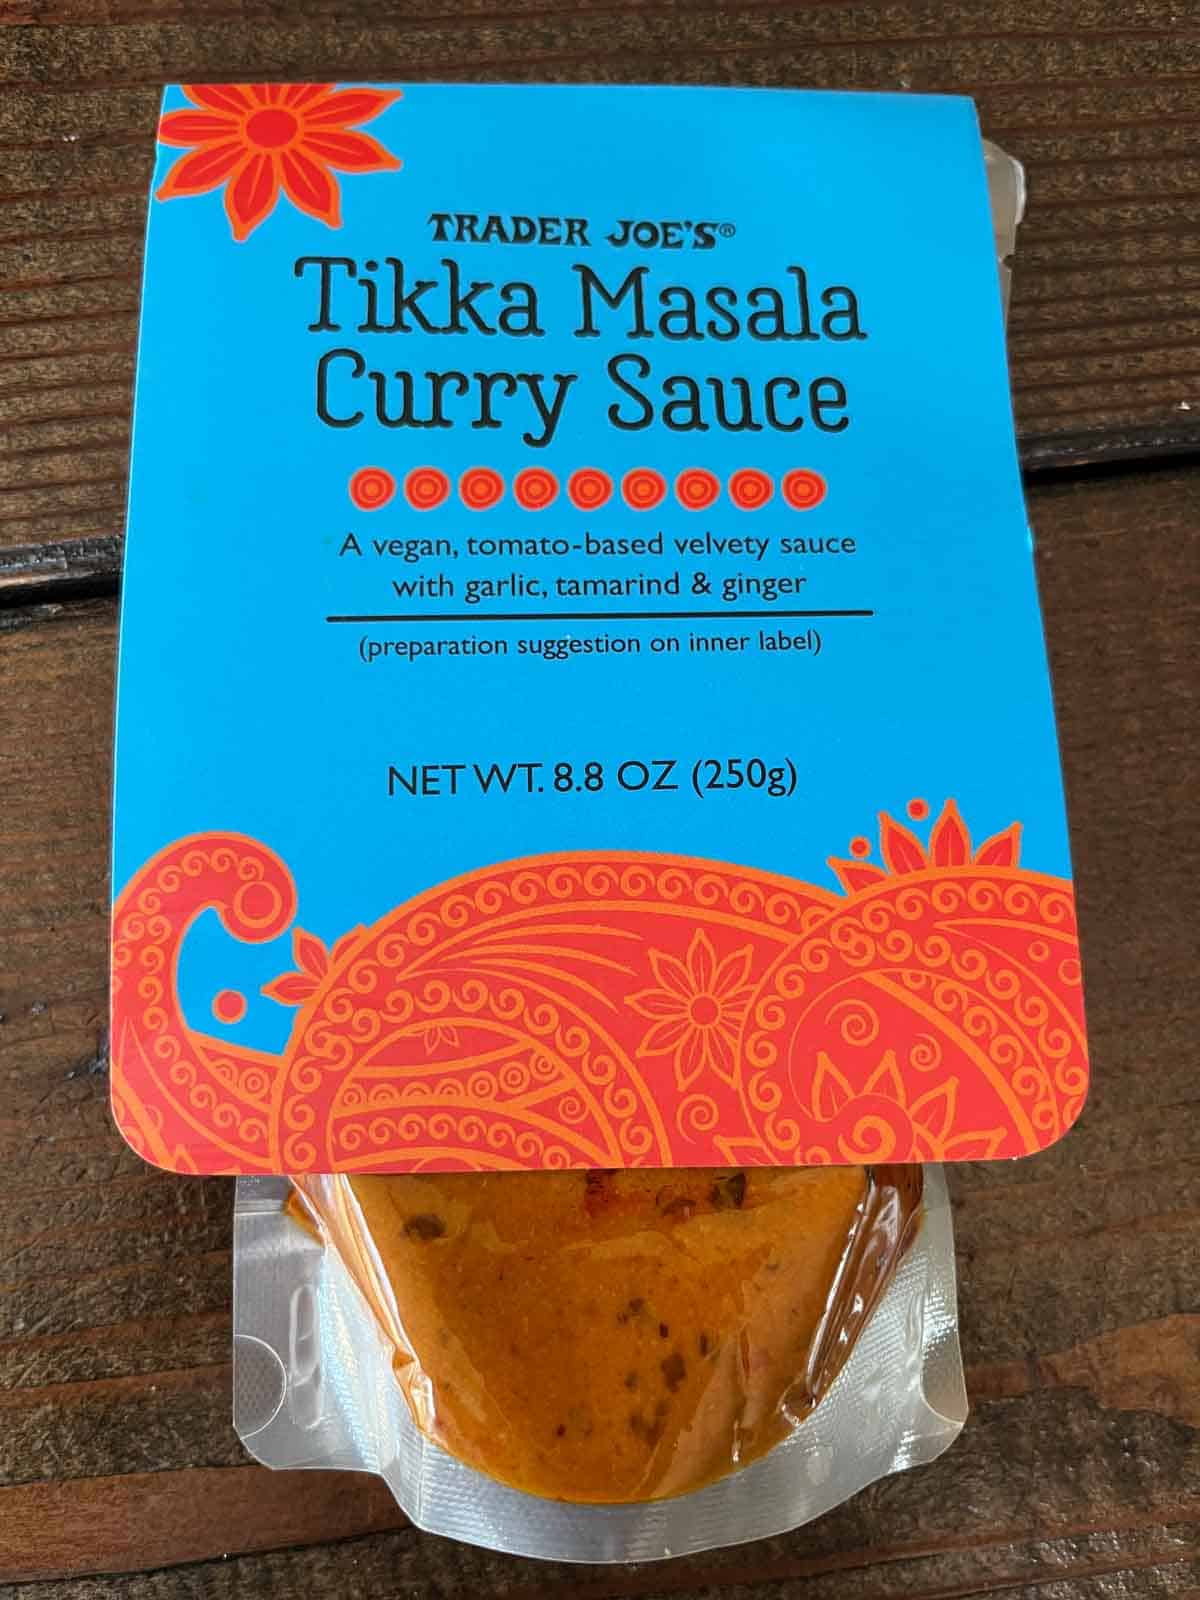 A package of Trader Joe's Chicken Tikka Masala sauce.